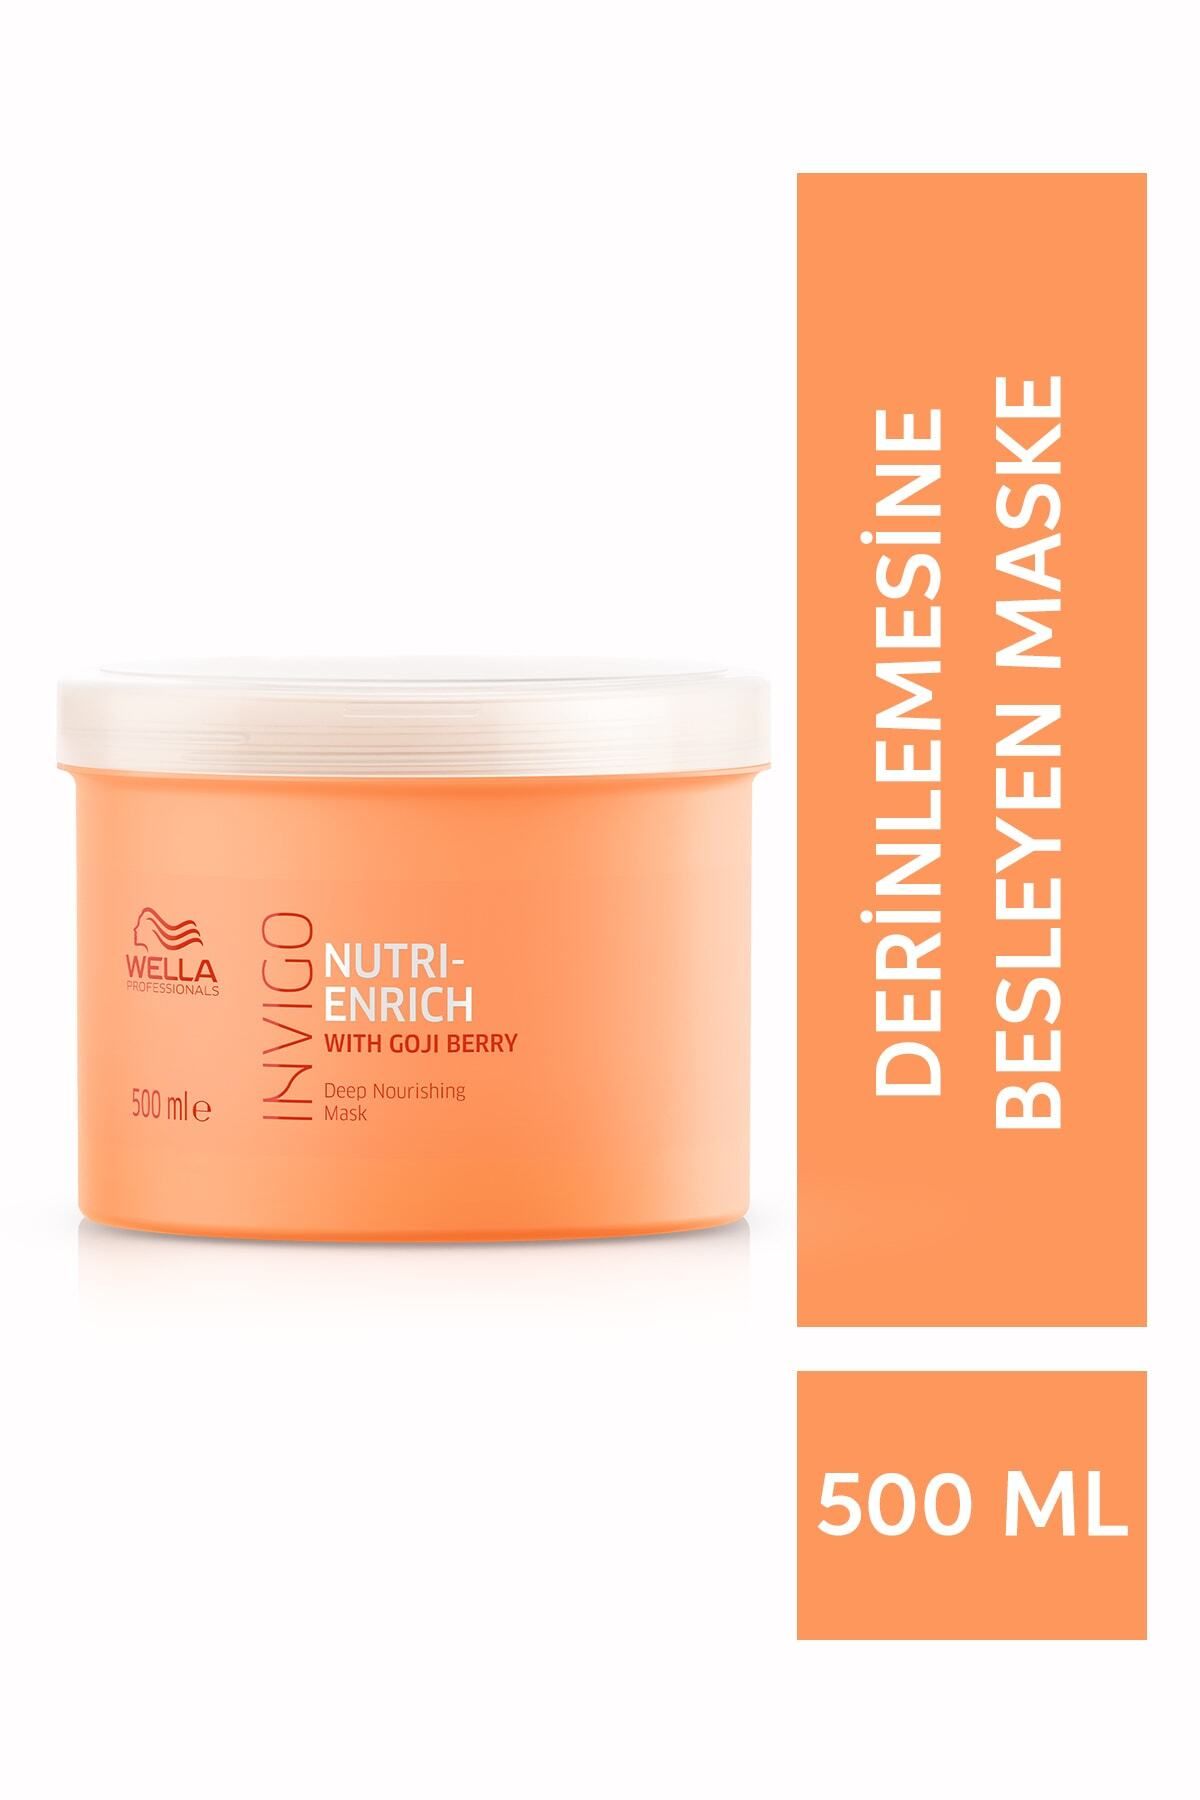 wella Professionals Invigo Nutri-enrich Derin Besleyici Maske 500 ml